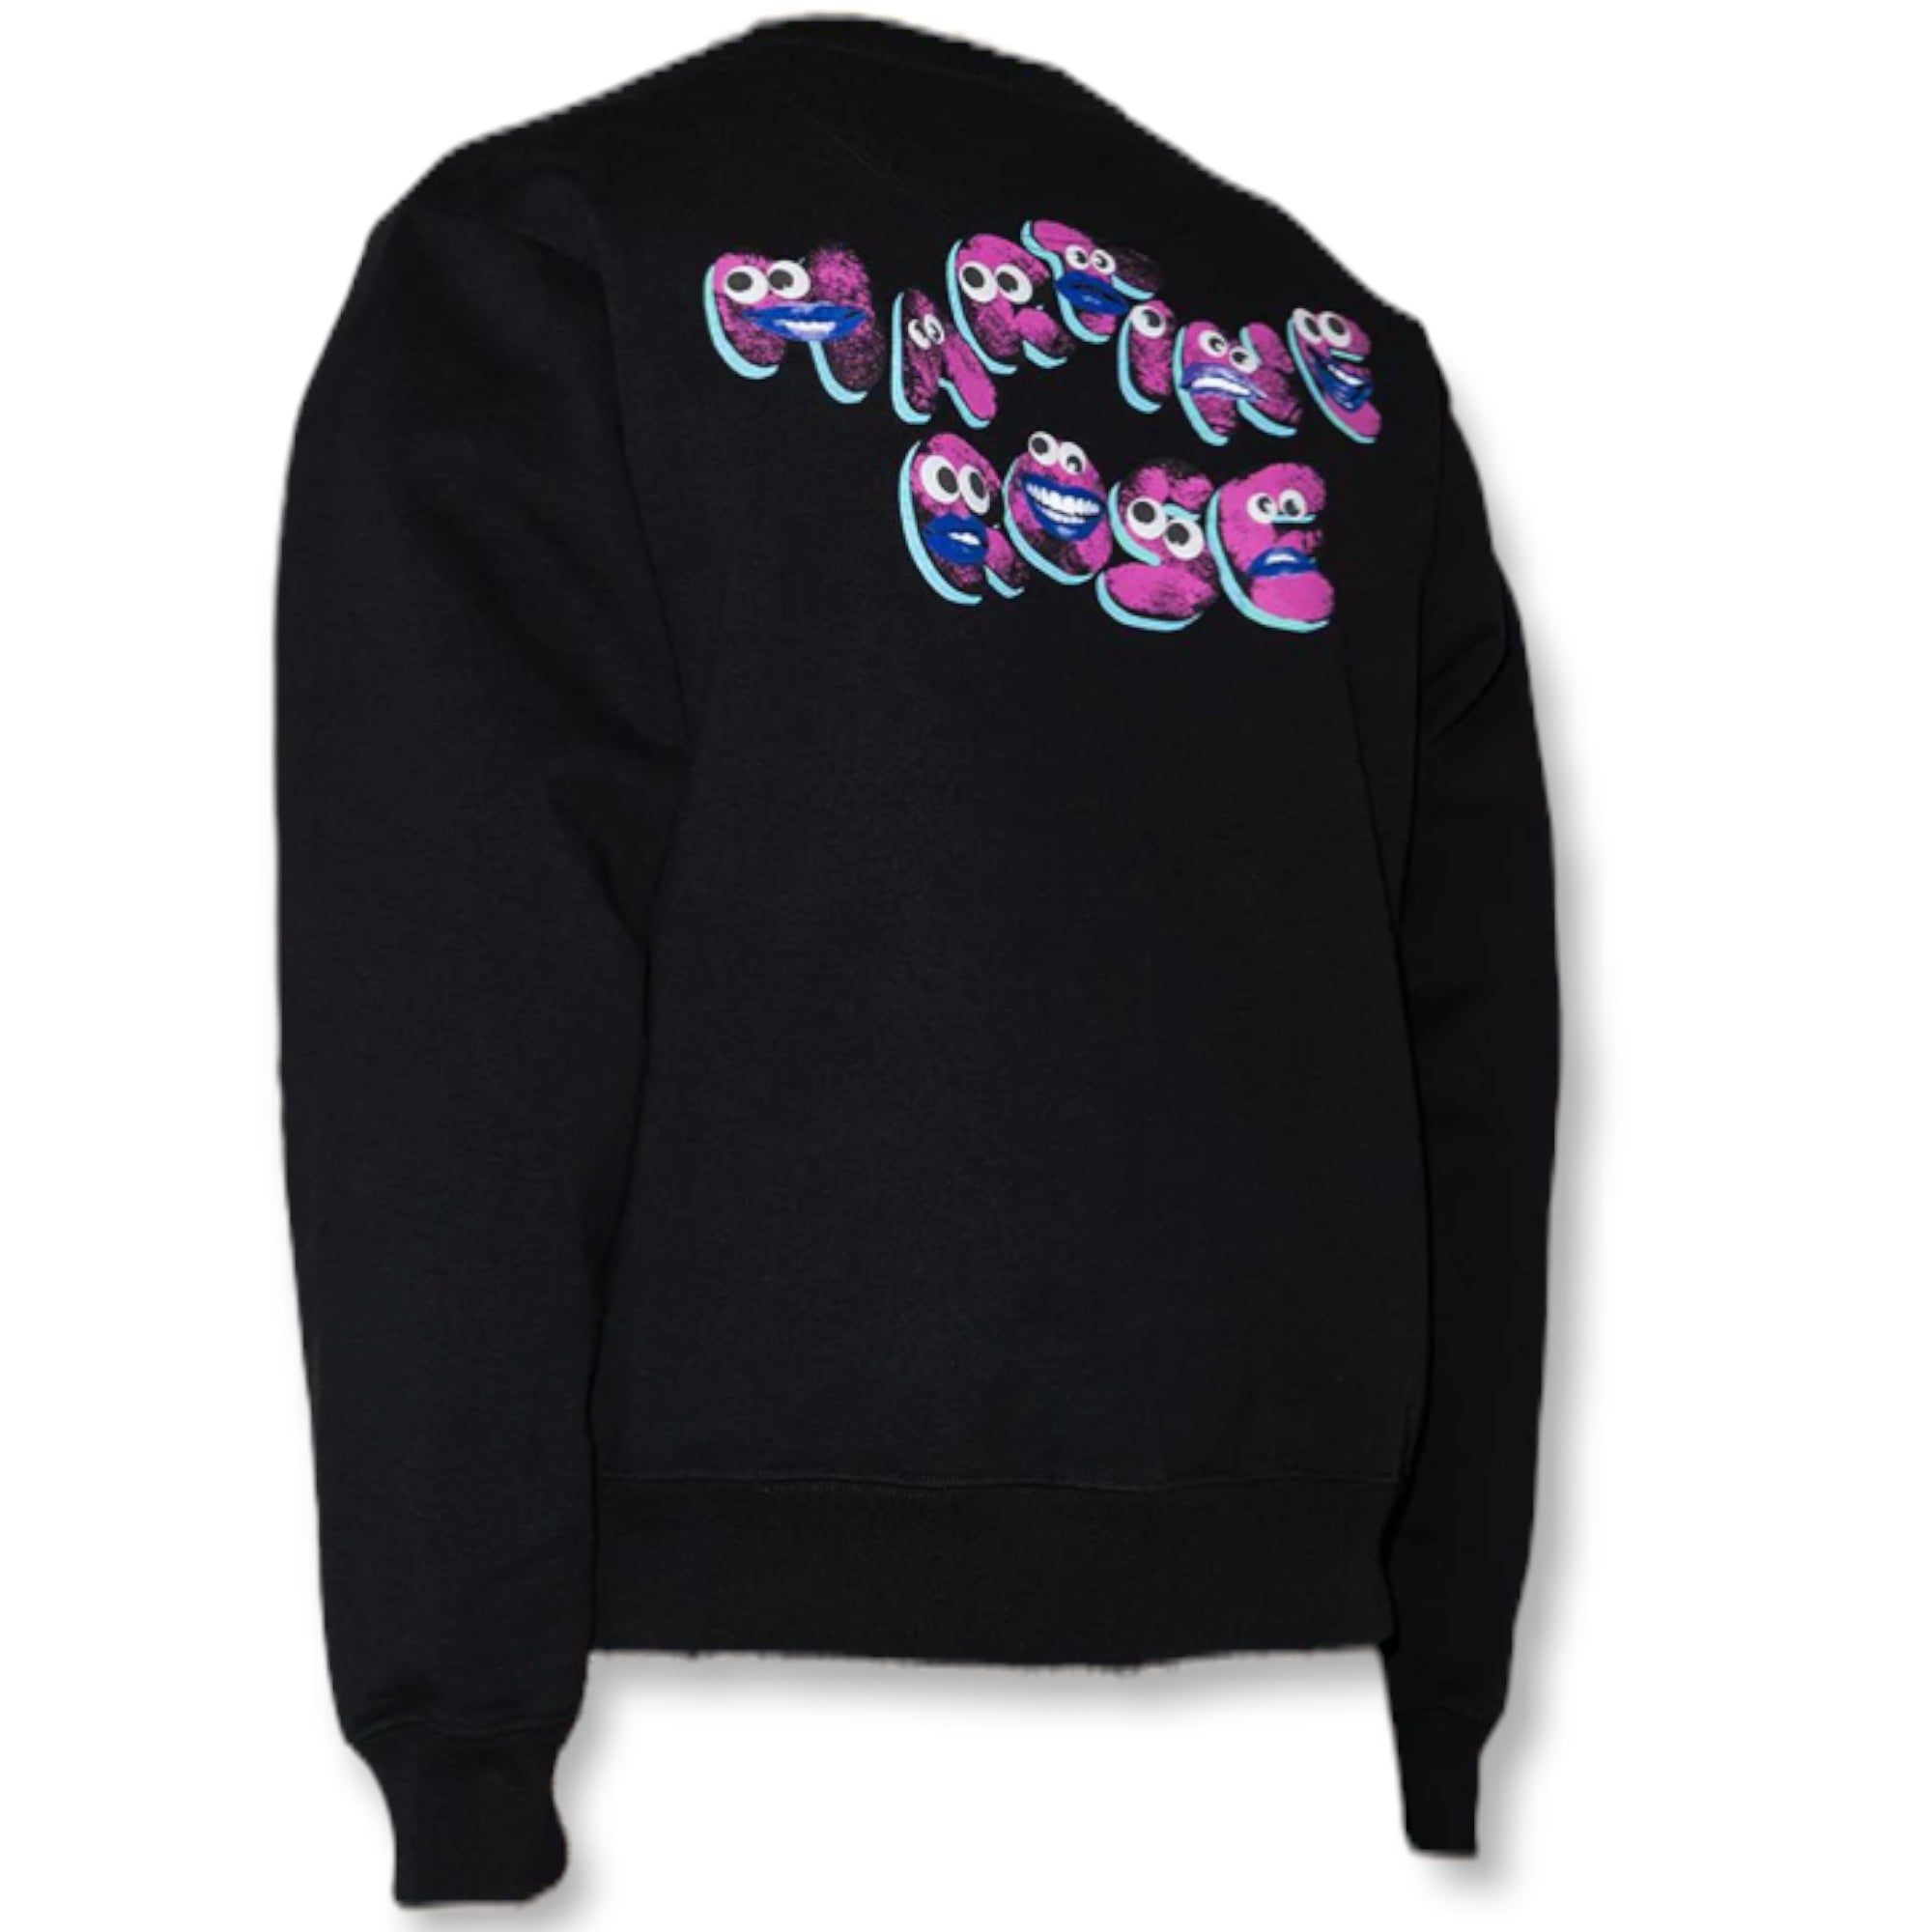 Martine Rose logo print crew neck sweatshirt |Size:XL|